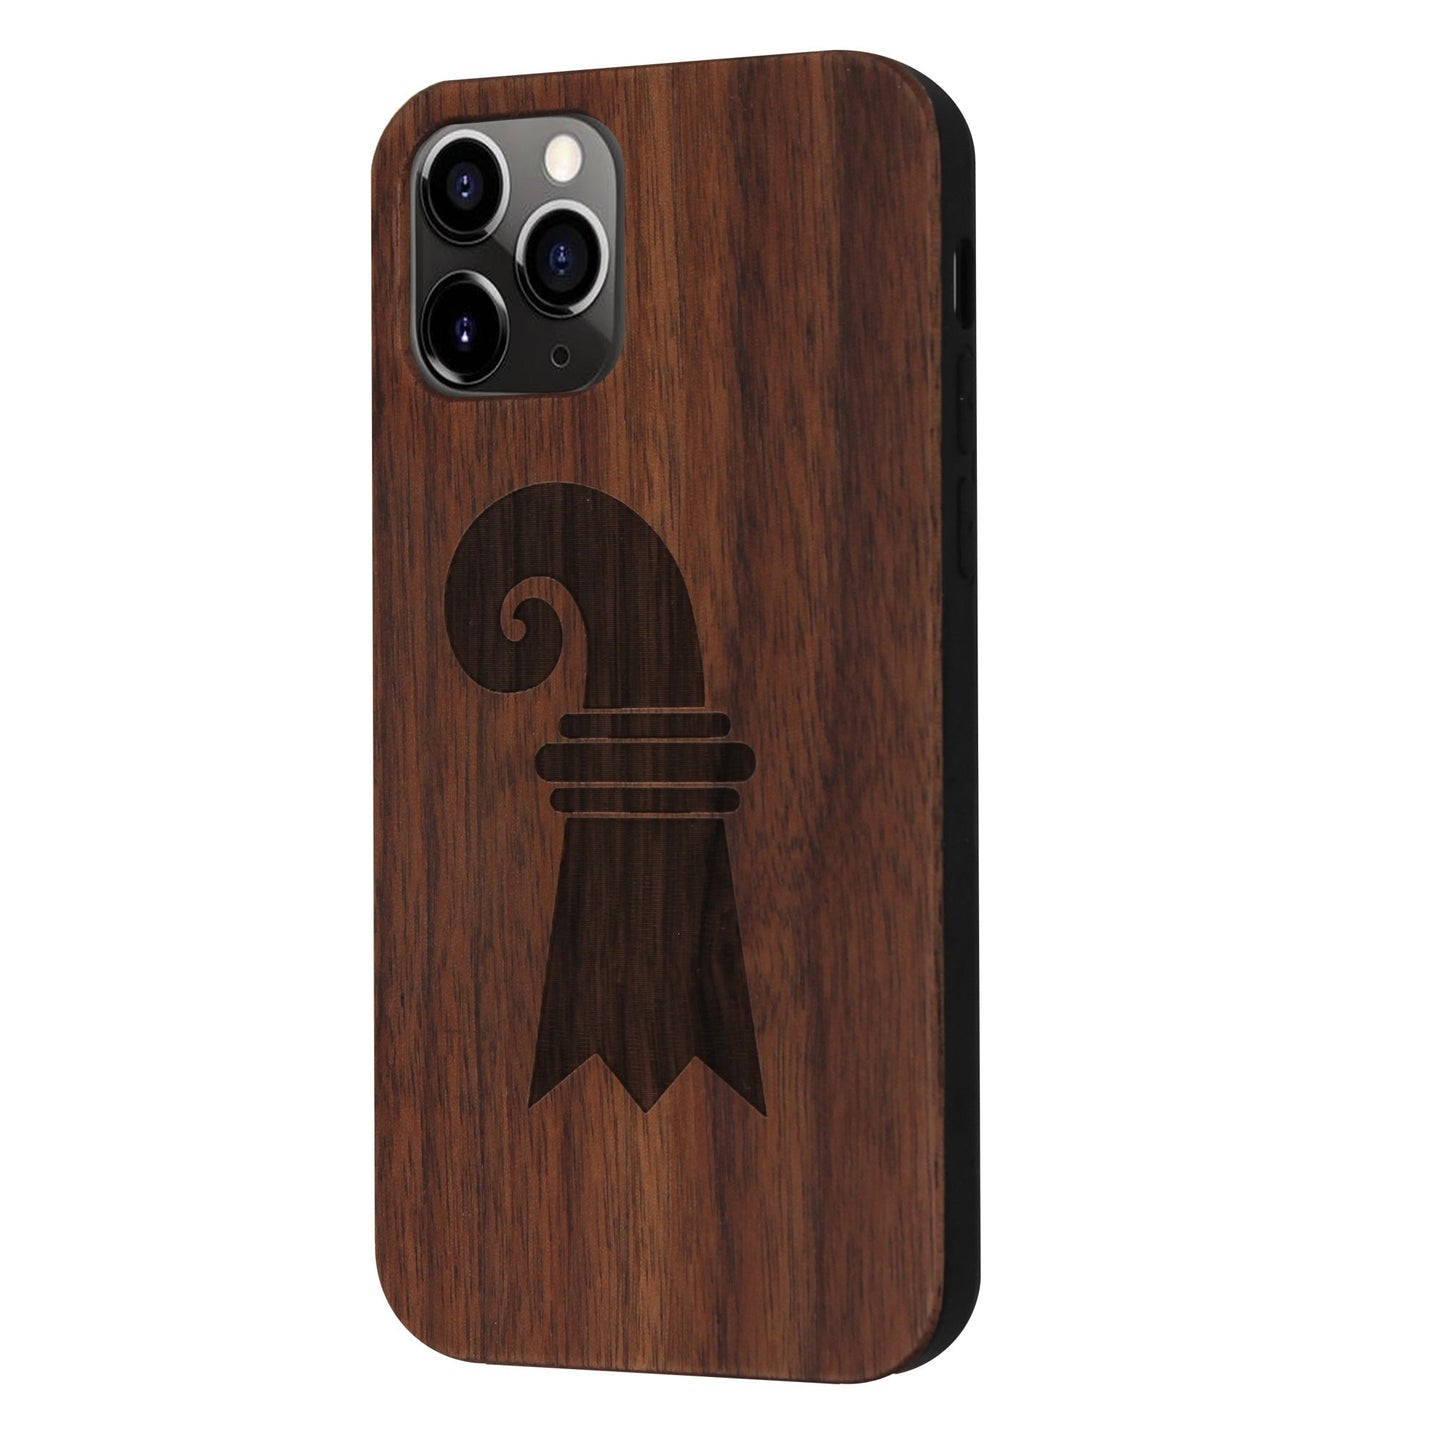 Baslerstab Eden case made of walnut wood for iPhone 11 Pro Max